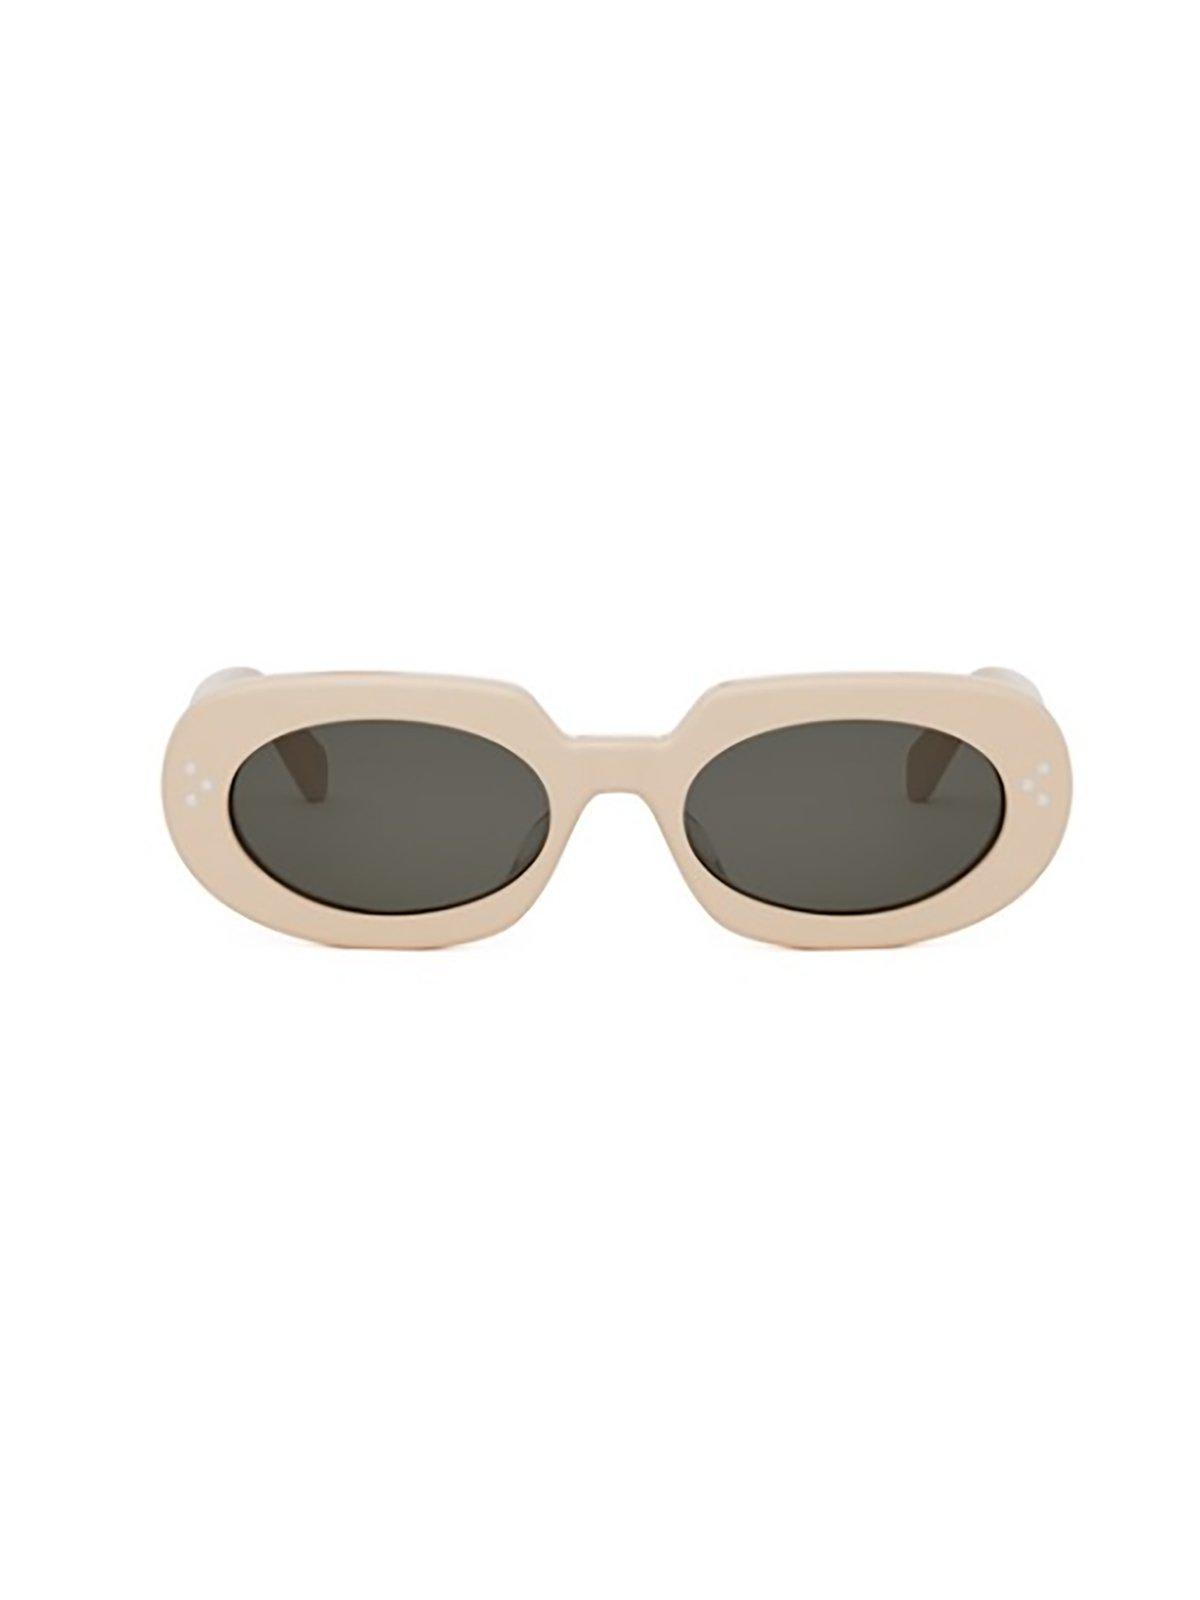 Oval Frame Sunglasses